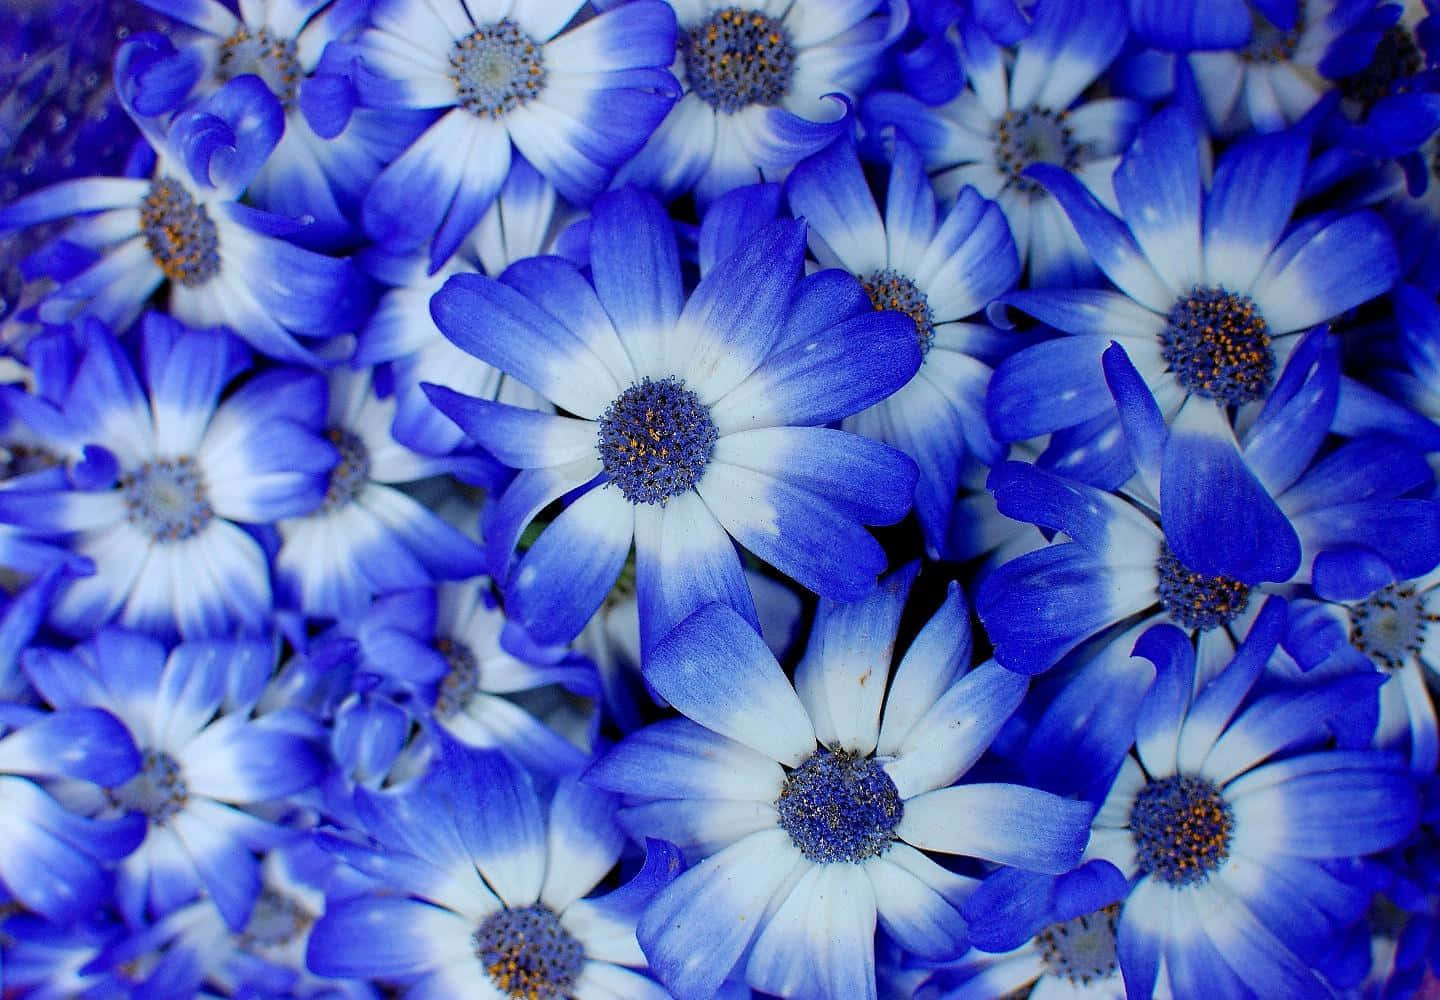 A vibrant blue flower drawing on a gray desktop Wallpaper